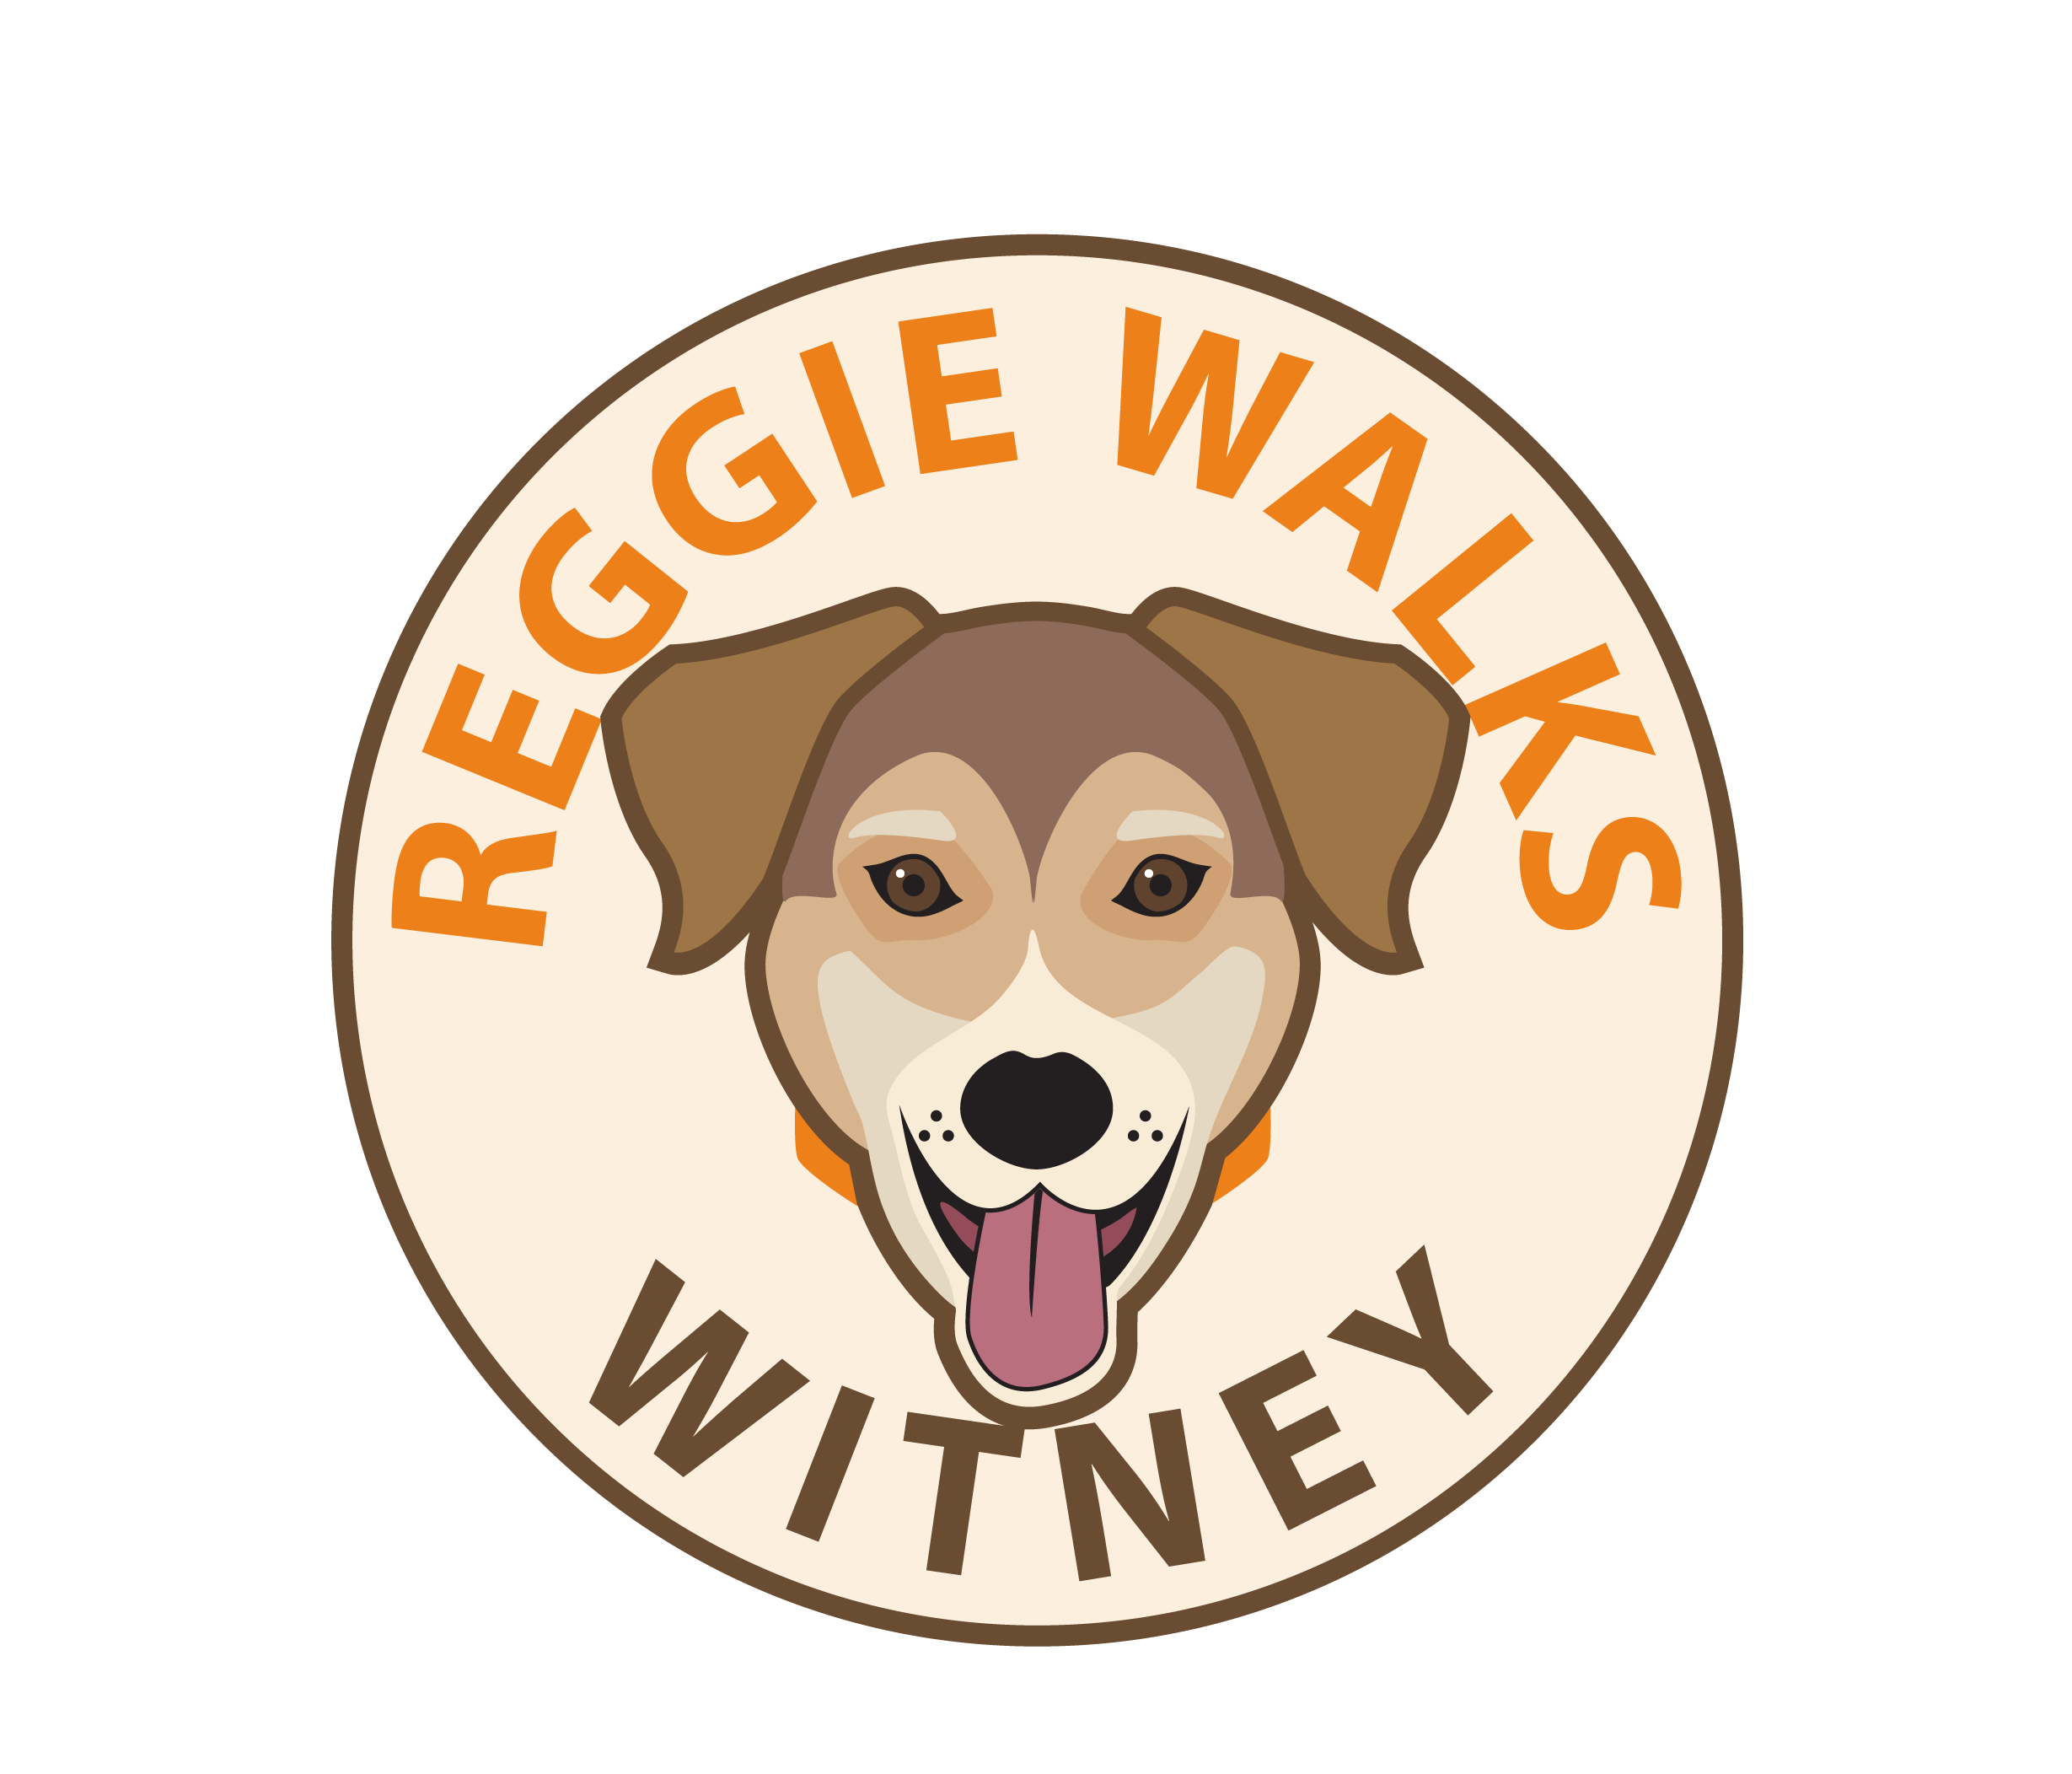 Reggie Walks Witney - Witney Dog Walking and Pet Service